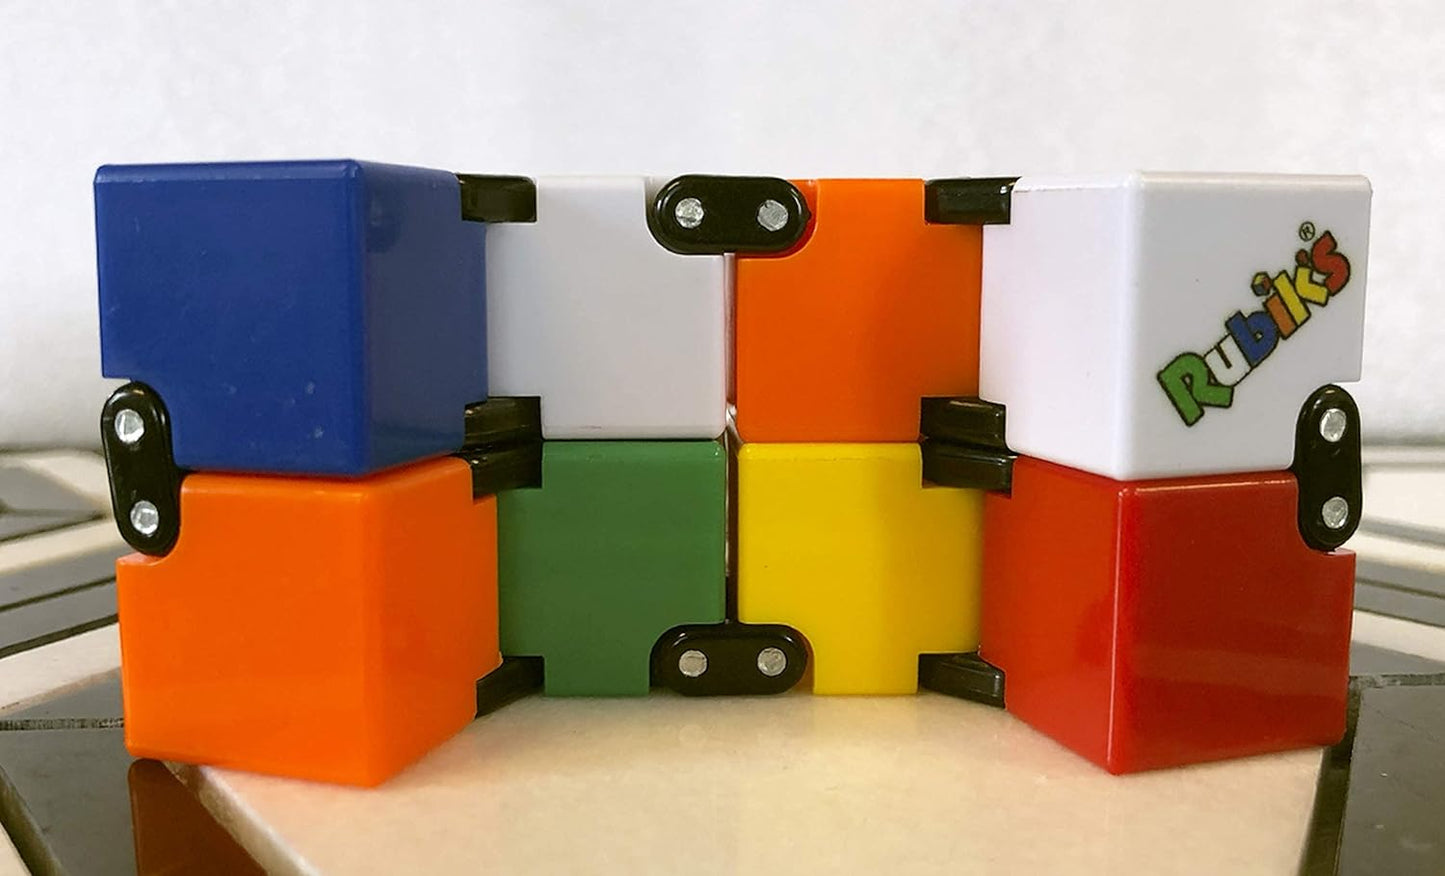 Rubiks Infinity Cubes